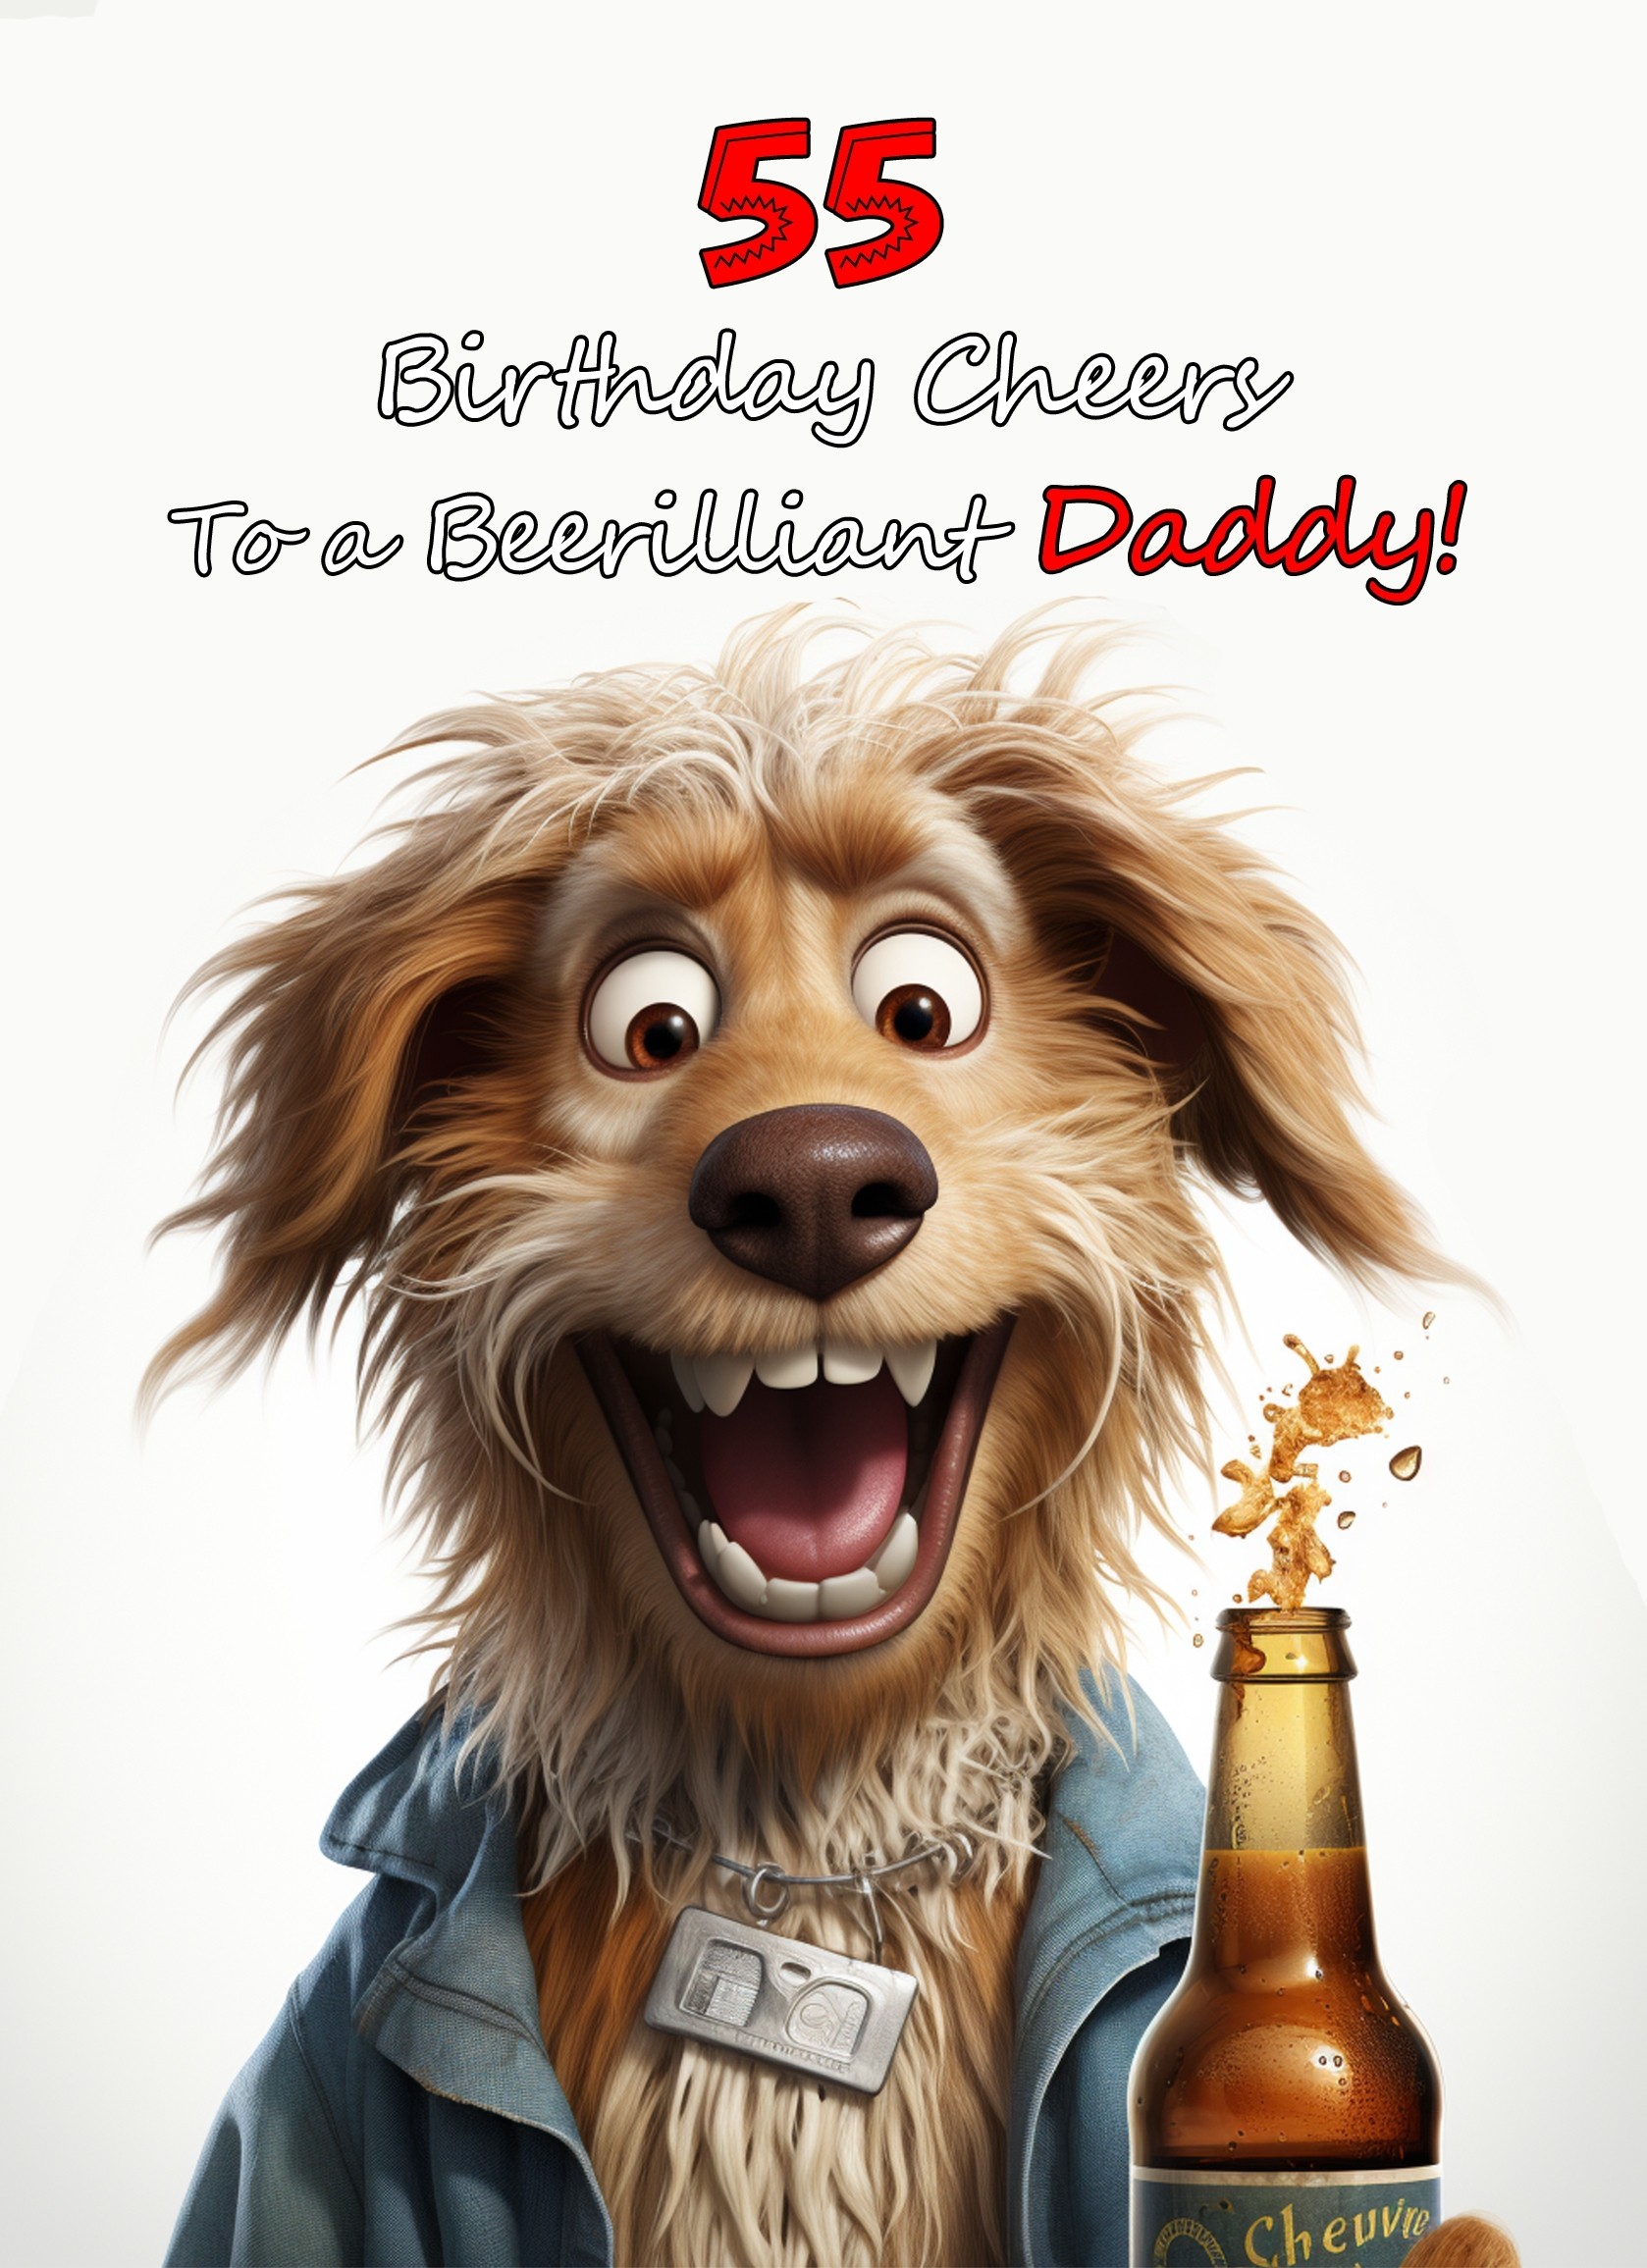 Daddy 55th Birthday Card (Funny Beerilliant Birthday Cheers)